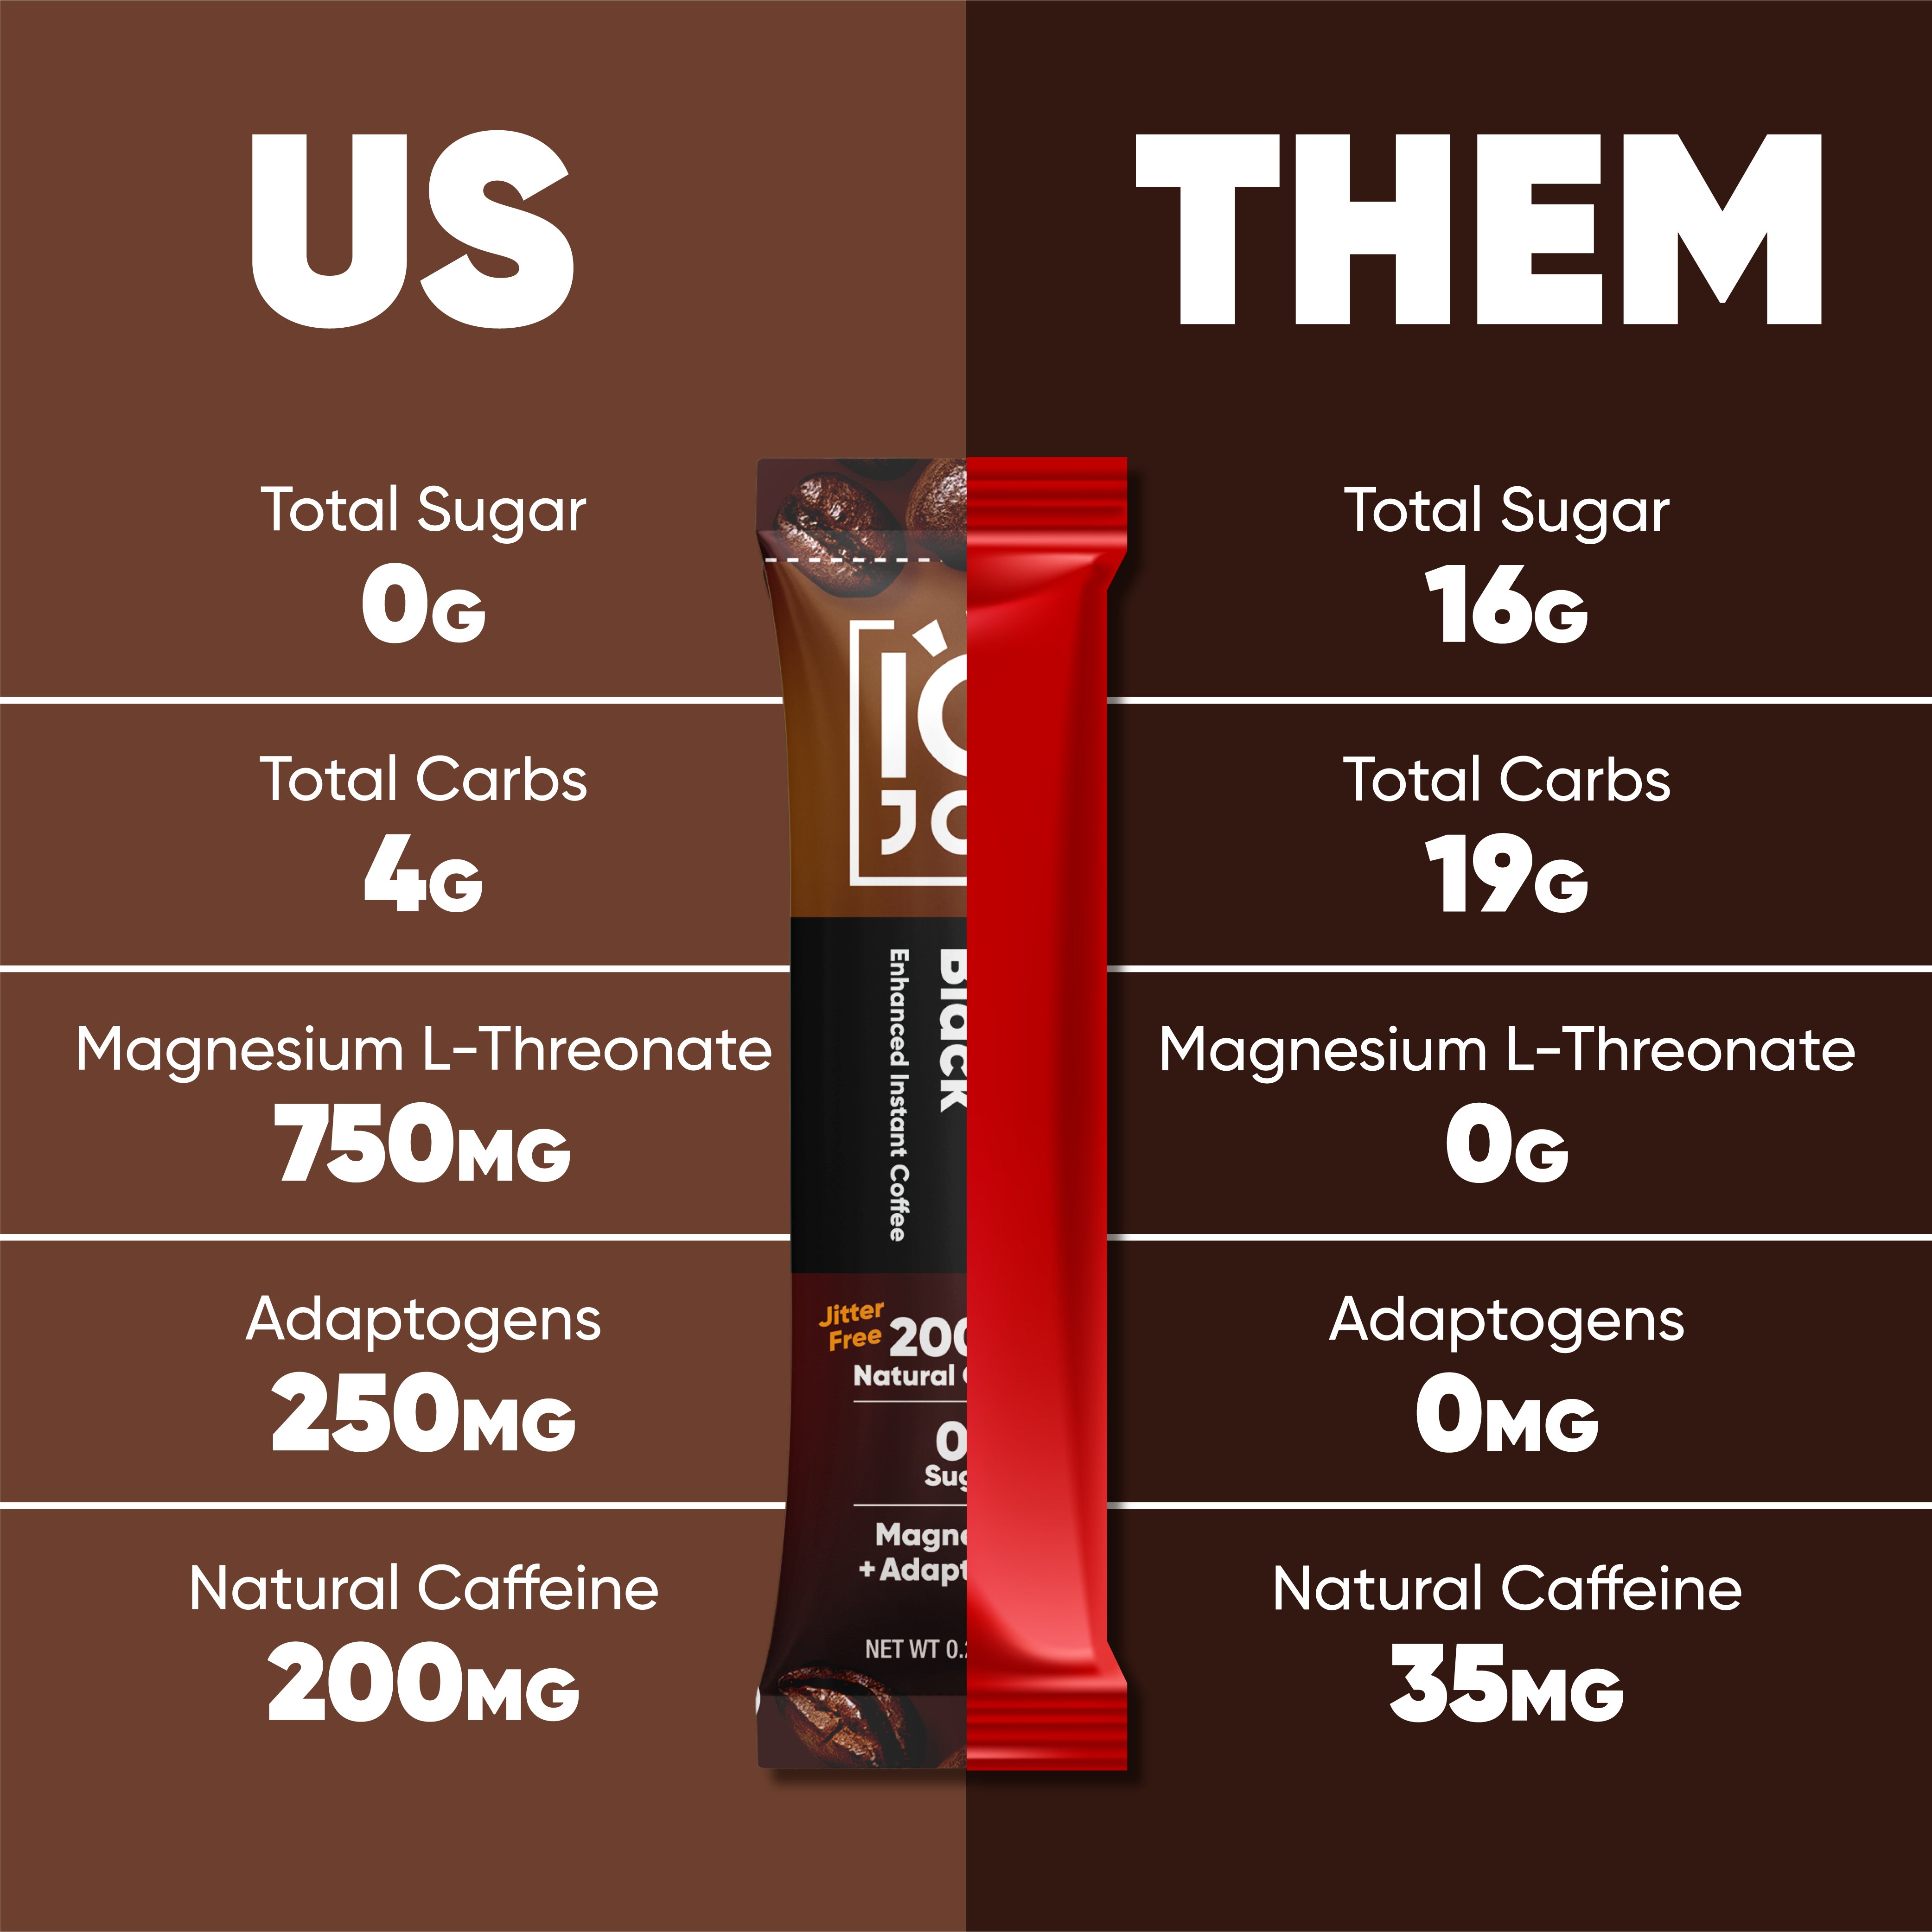 IQJOE Variety is the Best Mushroom Coffee. 0G Sugar, 4G Carbs, 750mg Magesium L-Threonate, 250mg Adaptogens, 200mg of Caffeine.